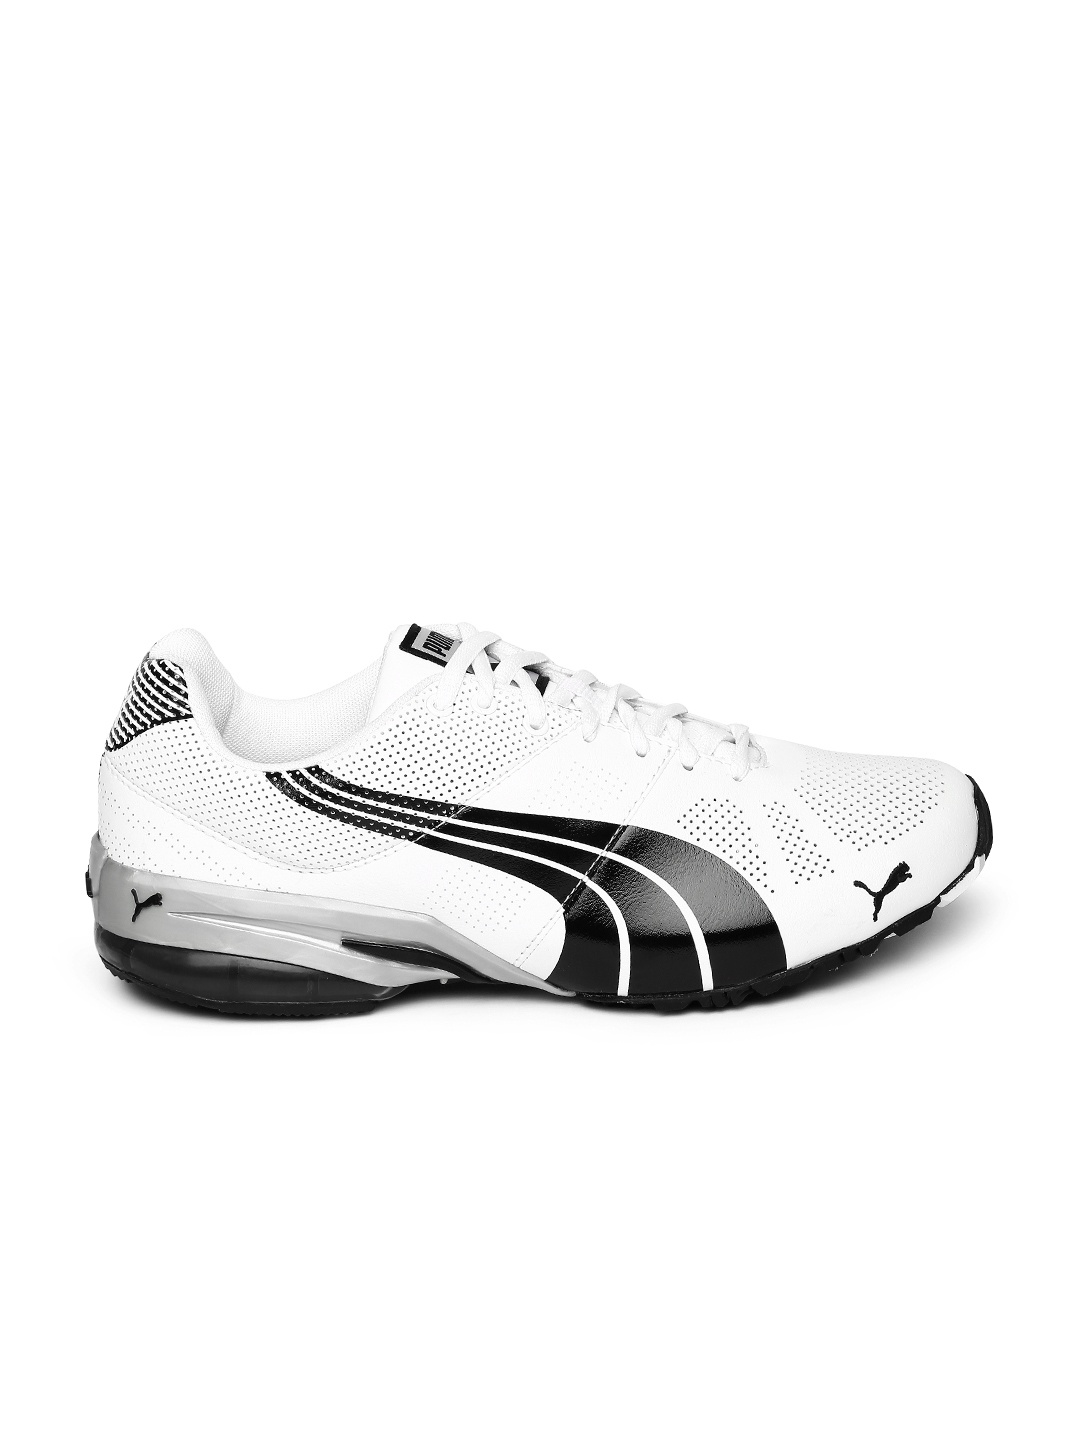 myntra puma men's sports shoes